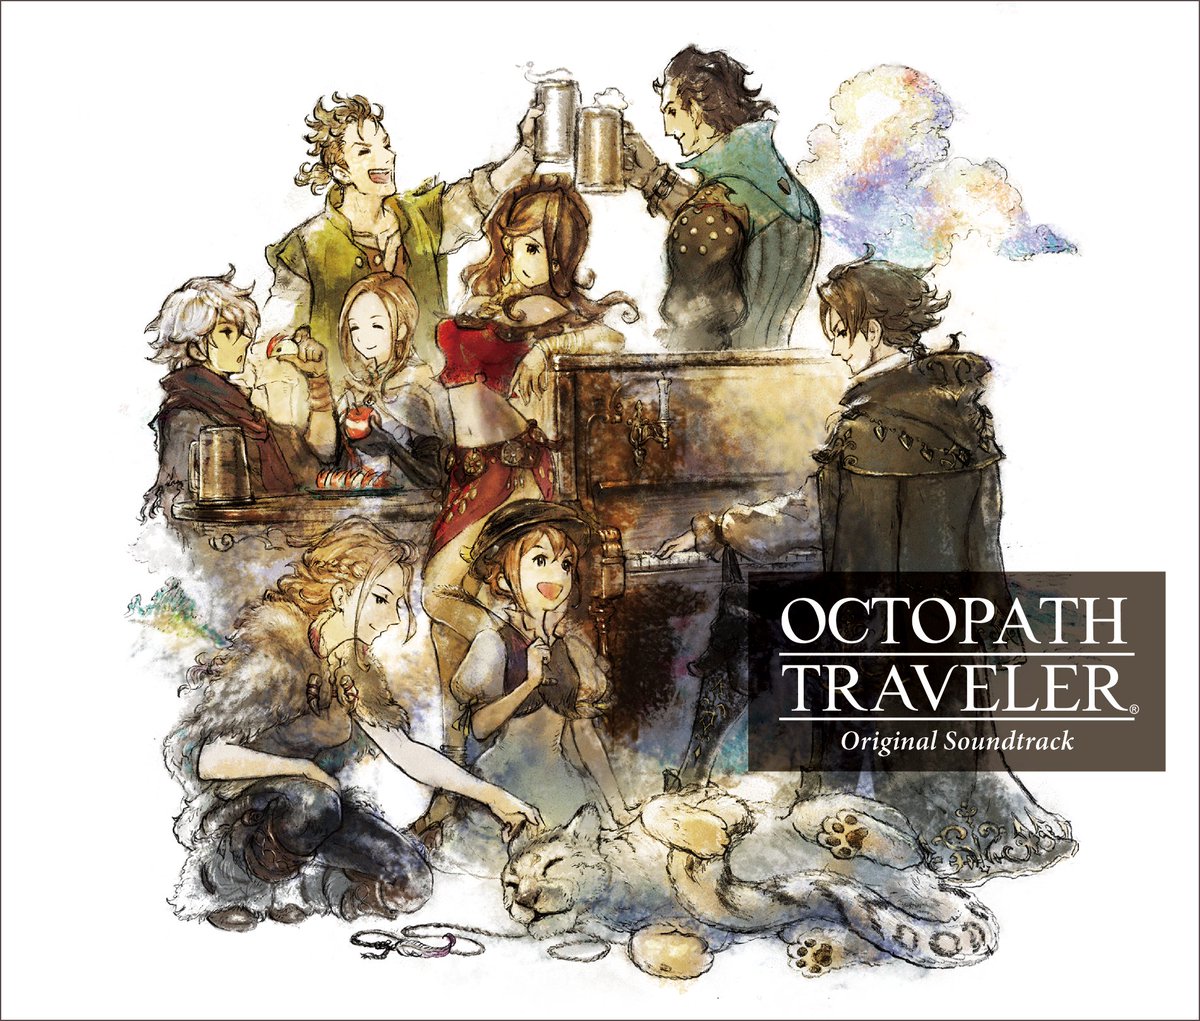 Square Enix Music على تويتر Octopath Traveler Original Soundtrack コンポーザー西木康智氏による全曲分の楽曲解説が公式サイトからもご覧いただけます 是非楽曲と一緒にお楽しみください オクトパストラベラー T Co Jcth4jmg0e T Co